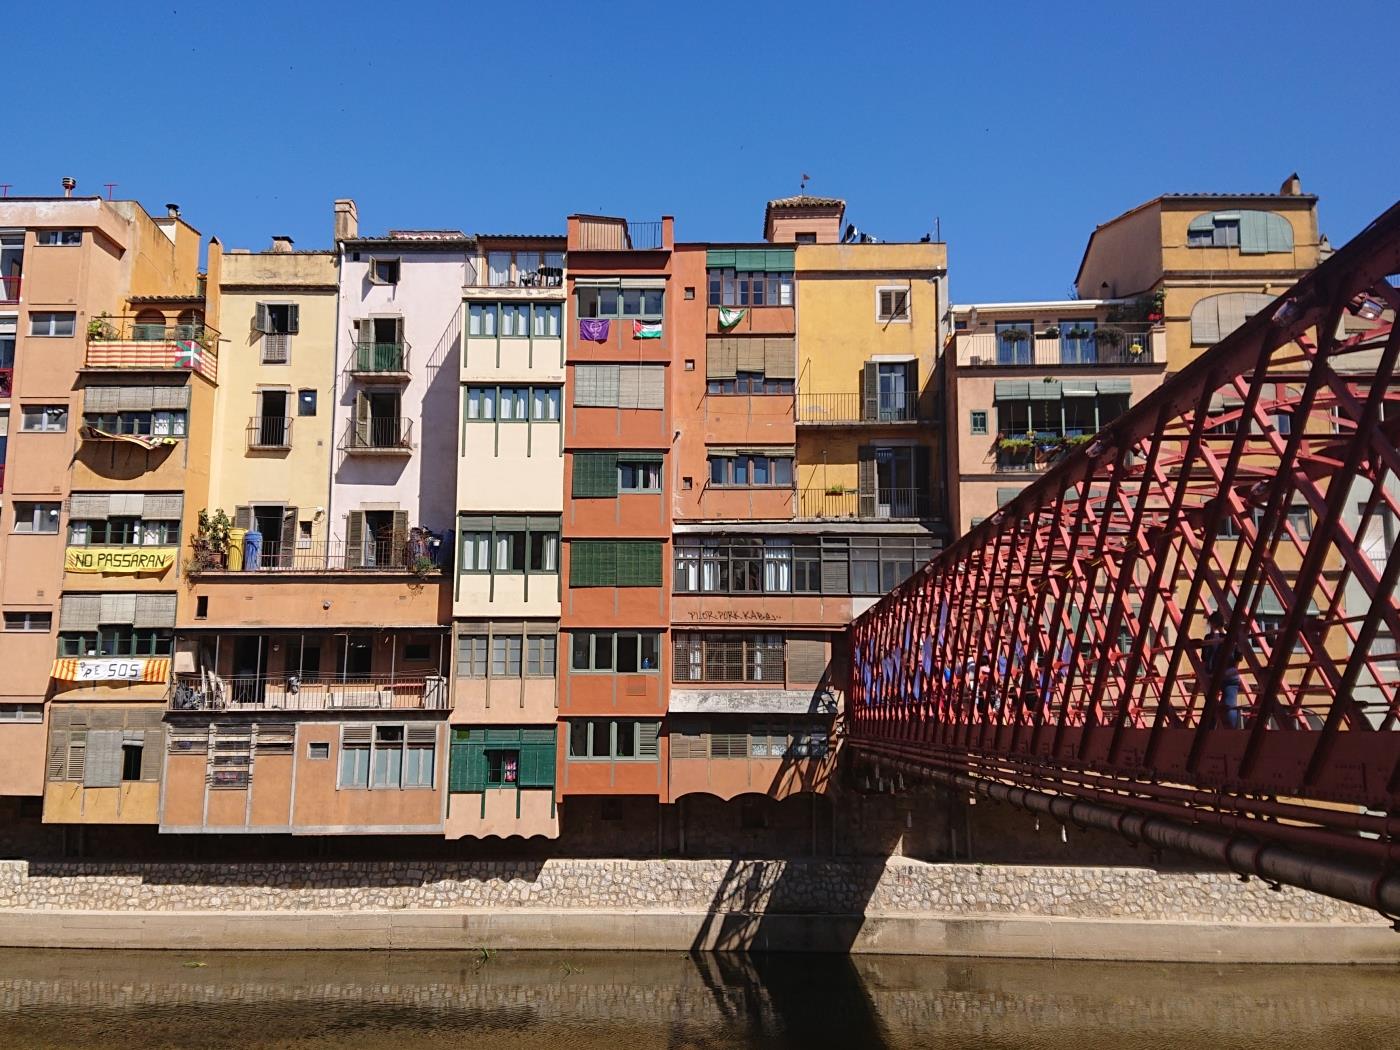 Rambla Eiffel 1 - Holiday apartment in Girona | Bravissimo in Girona